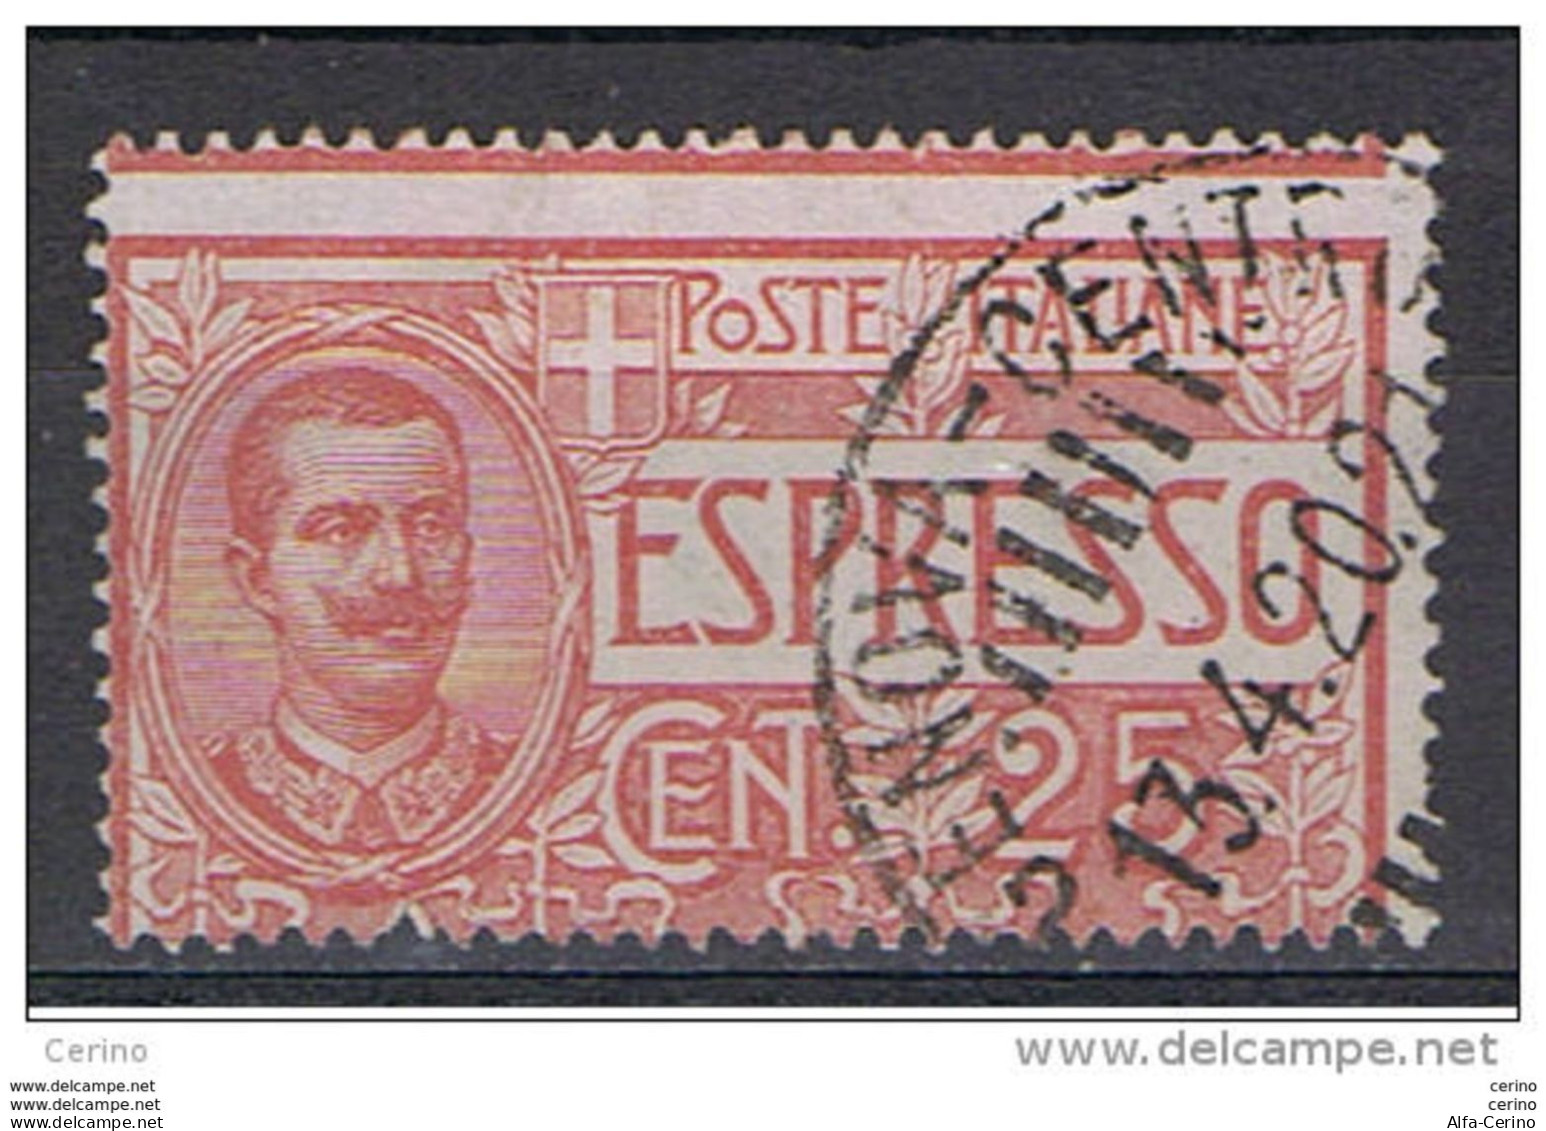 REGNO  VARIETA':  1903  ESPRESSO  -  25 C. ROSA  US. -  DENTELLATURA  SPOSTATA  -  CORONA  CAPOVOLTA  -  C.E.I. 1 A - Express Mail